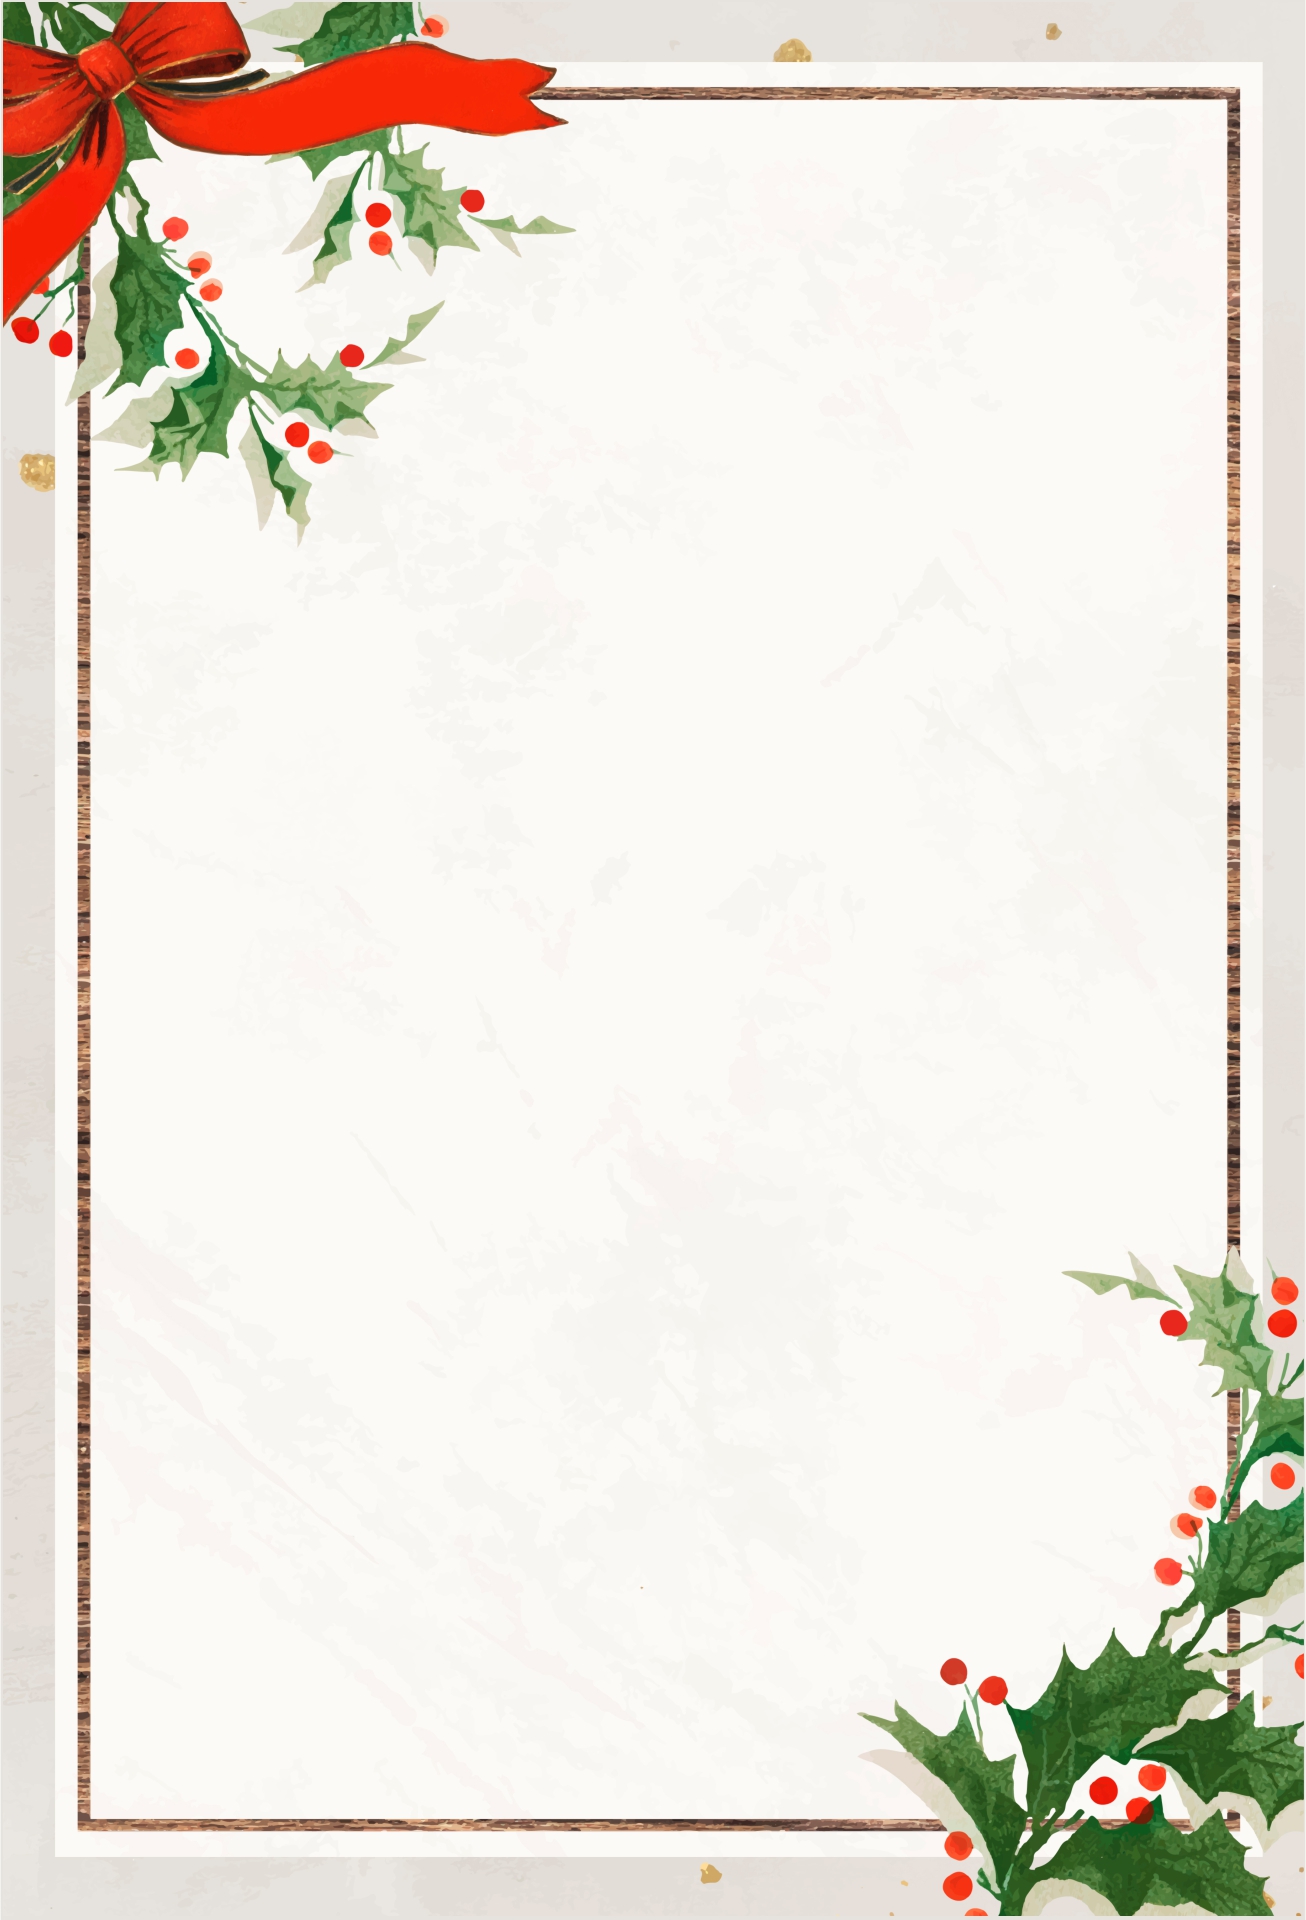 Free Printable Christmas Stationery Borders - Printable Templates Free